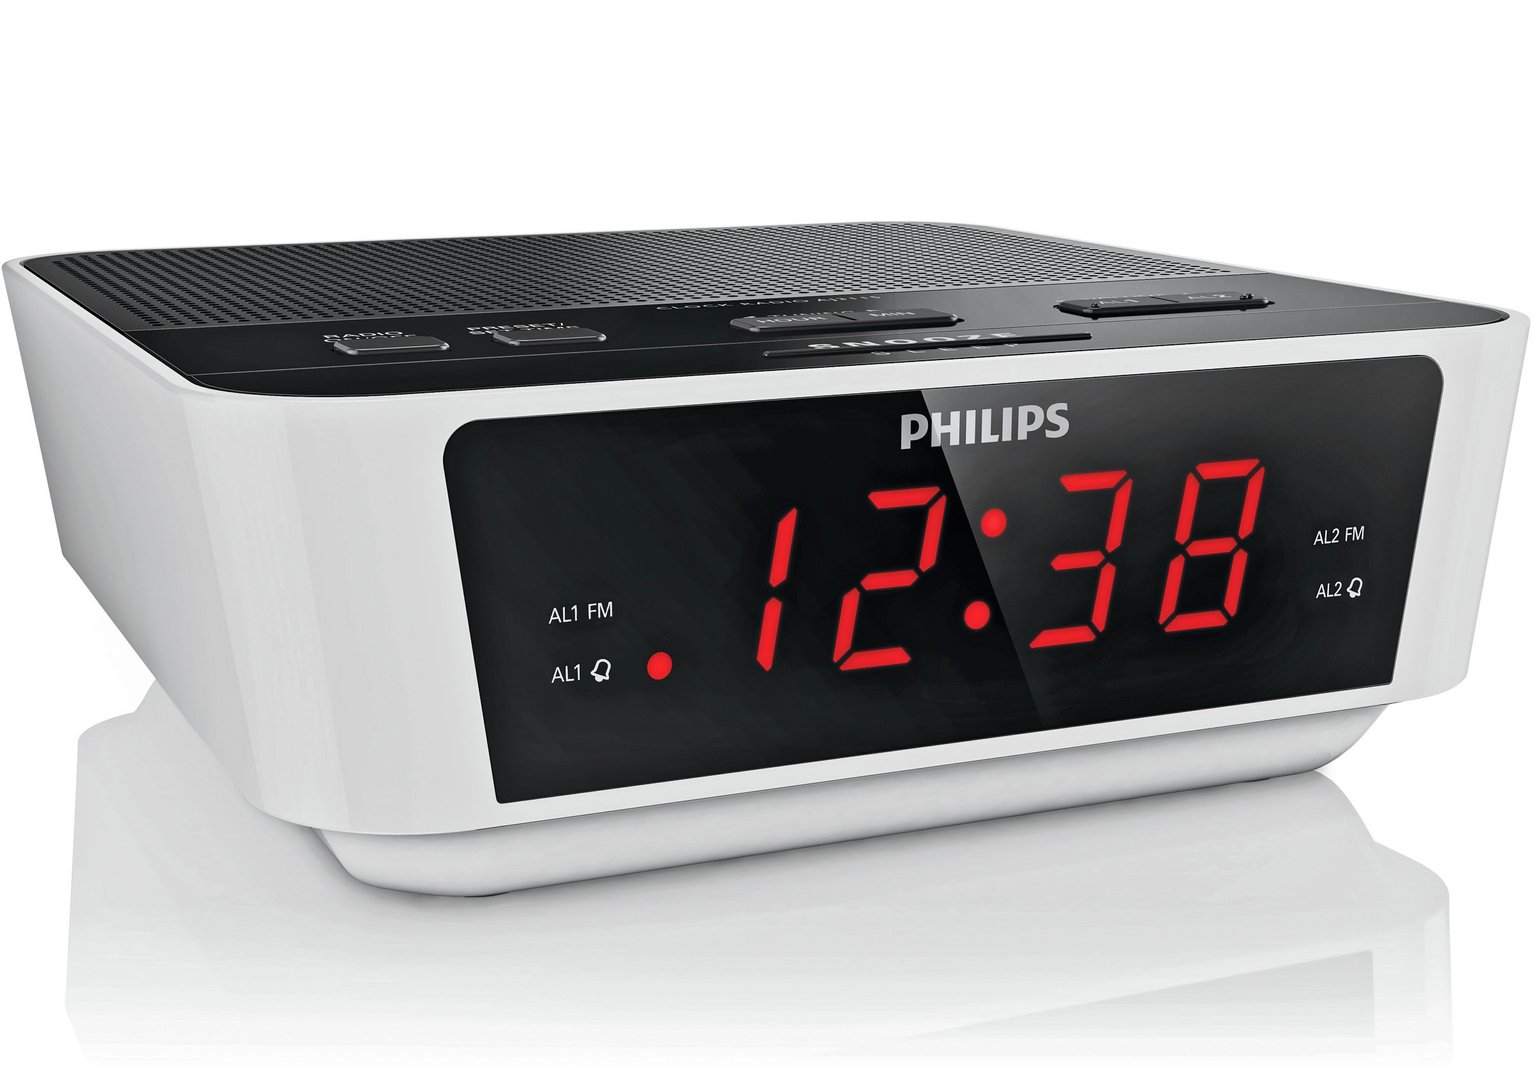 Philips AJ3115 FM Clock Radio Review